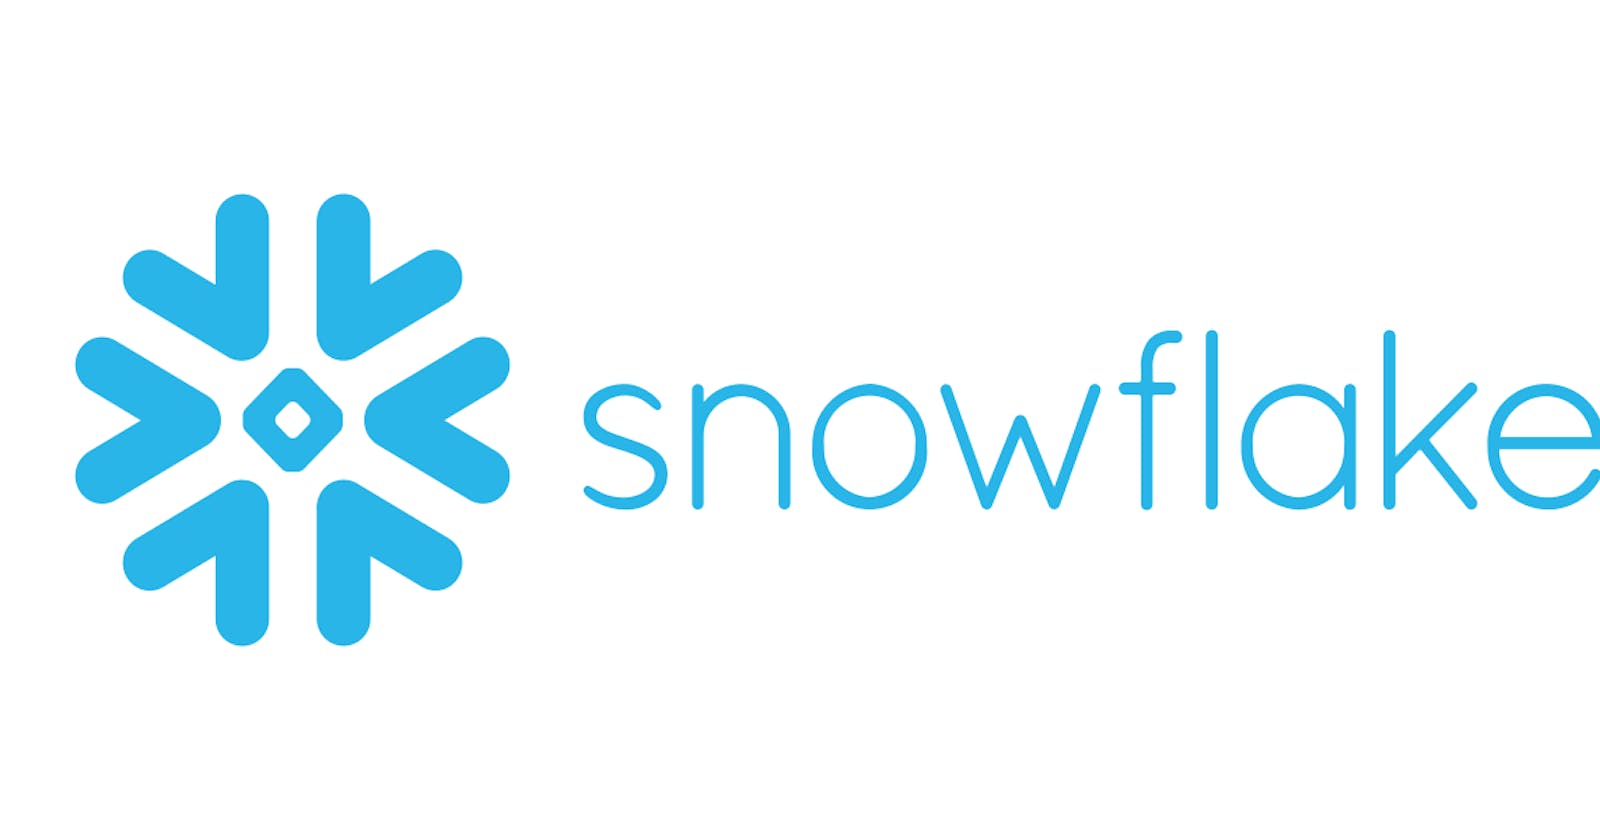 Snowflake: An Elastic Data Warehouse